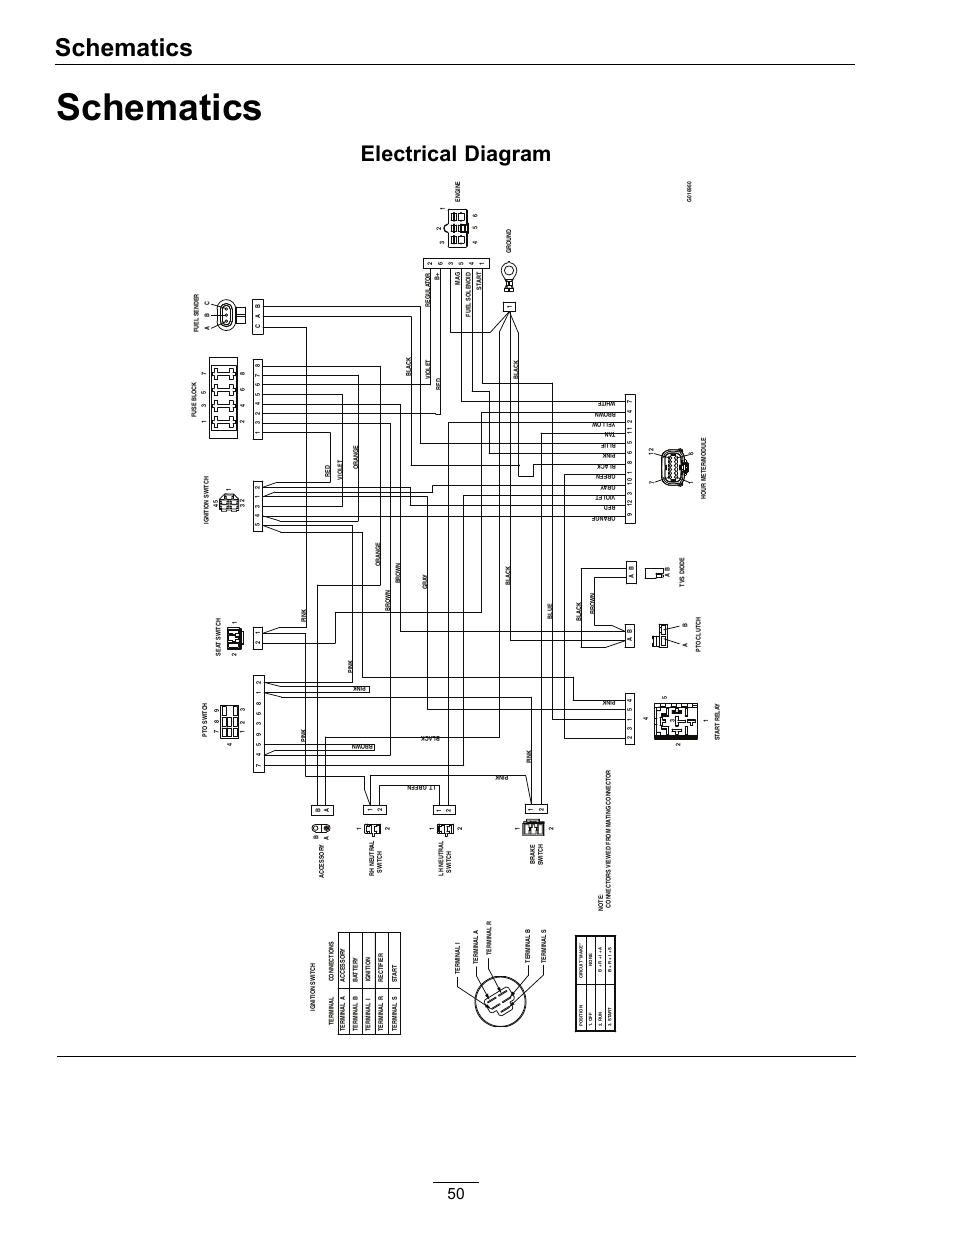 ouku 7 inch touchscreen/dvd receiver wiring diagram